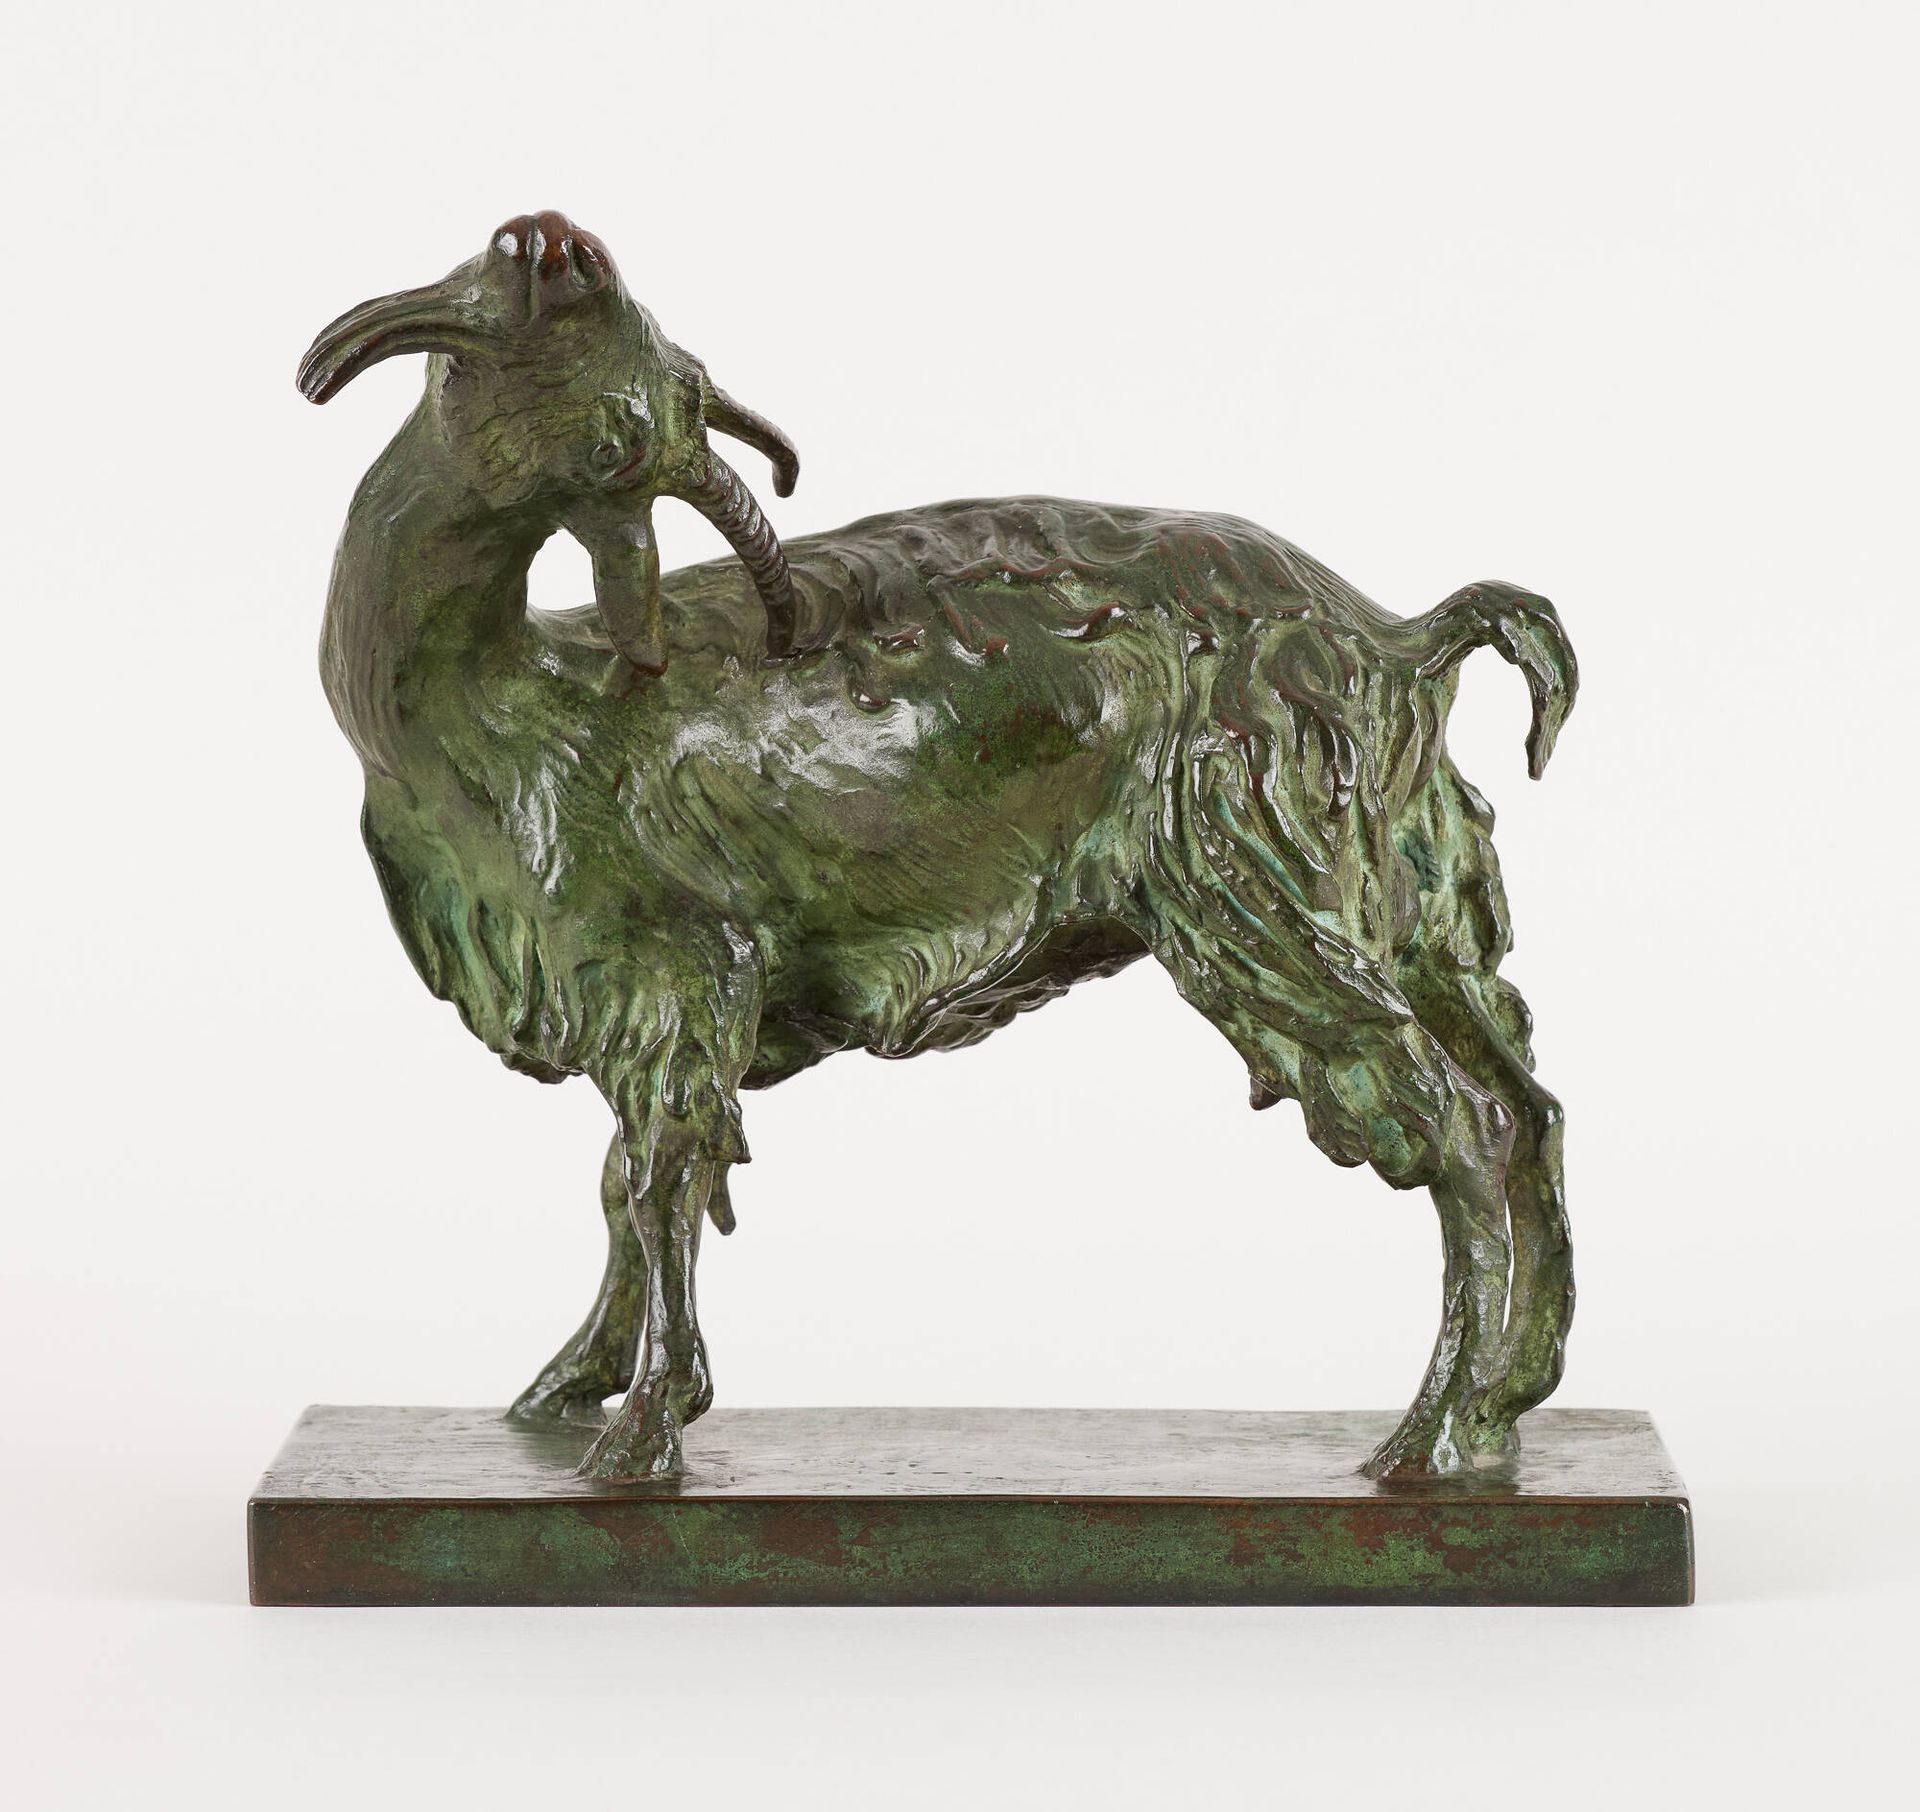 Travail du 20e. Escultura de bronce con pátina de tonos verdes: Cabra.
Atribuida&hellip;